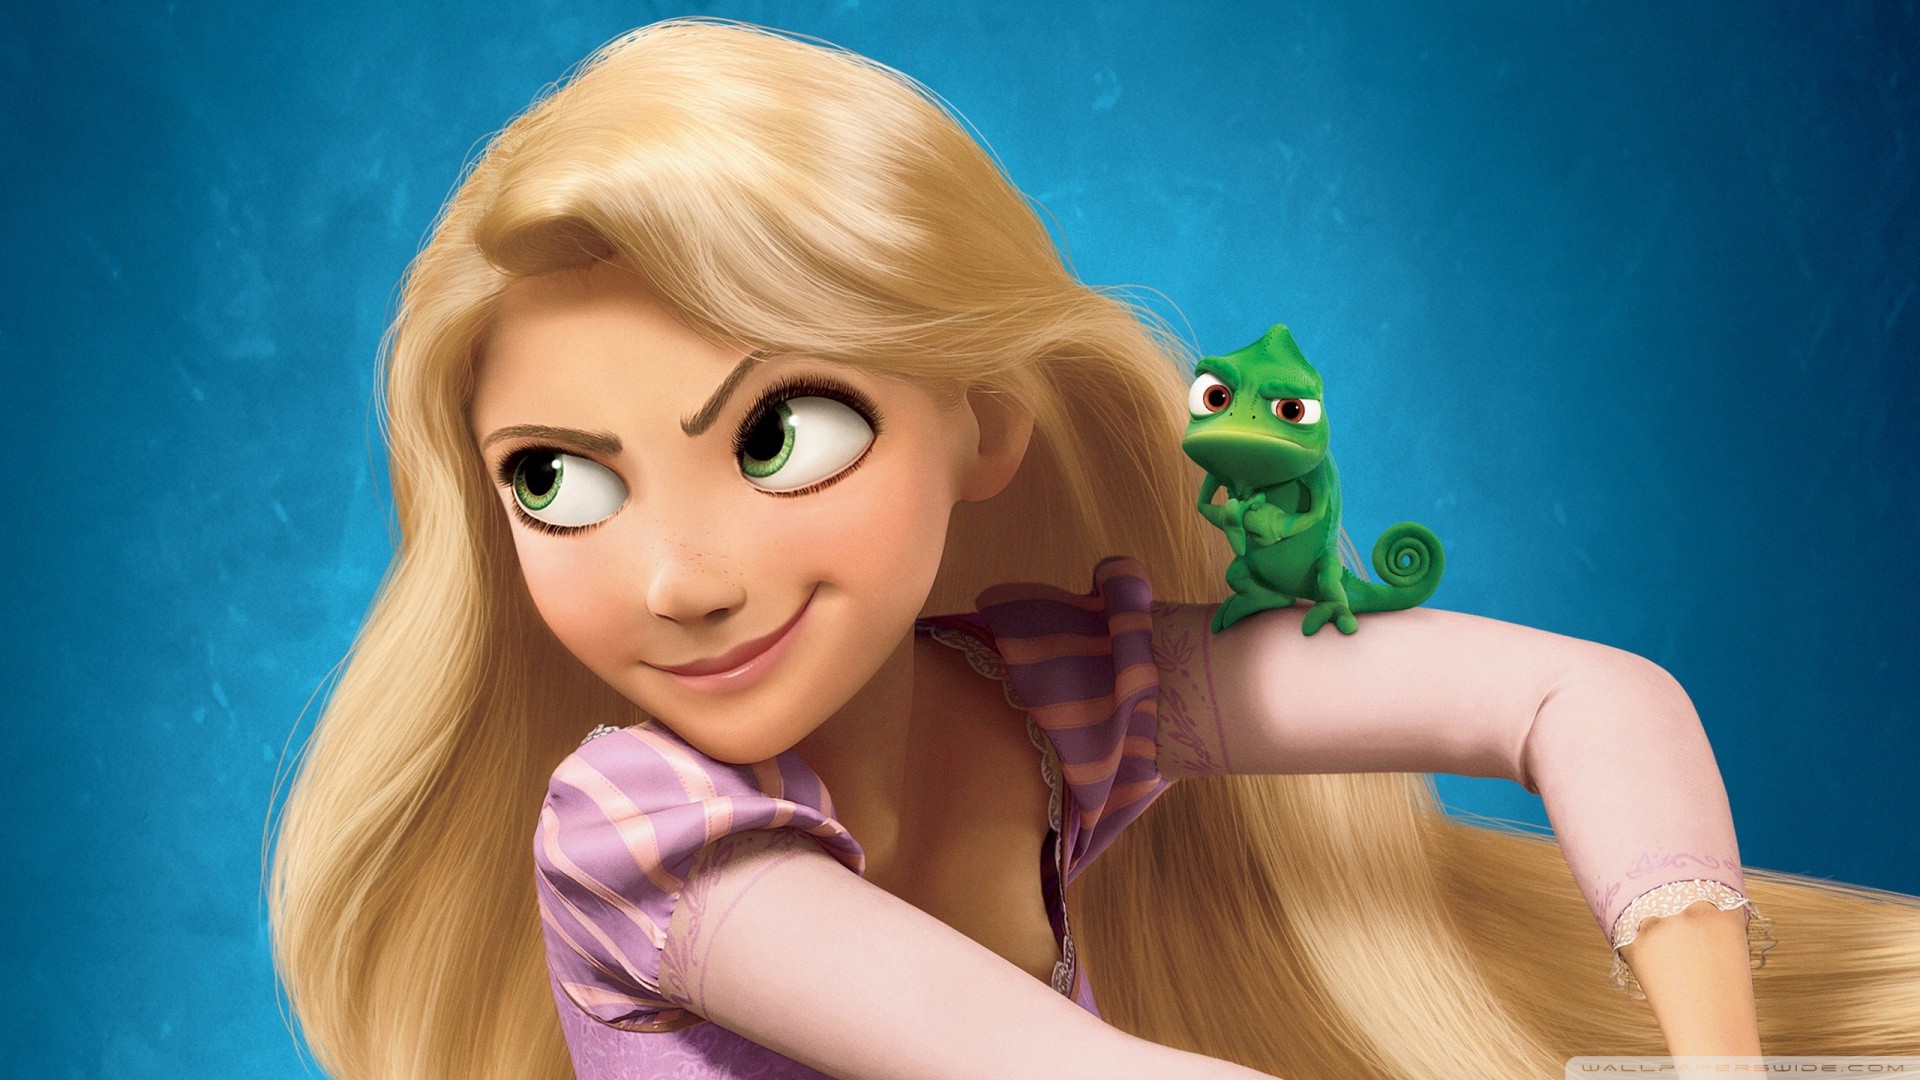 LongHaired Princess by enigmawing on DeviantArt  Disney princess  rapunzel Princess movies Disney rapunzel